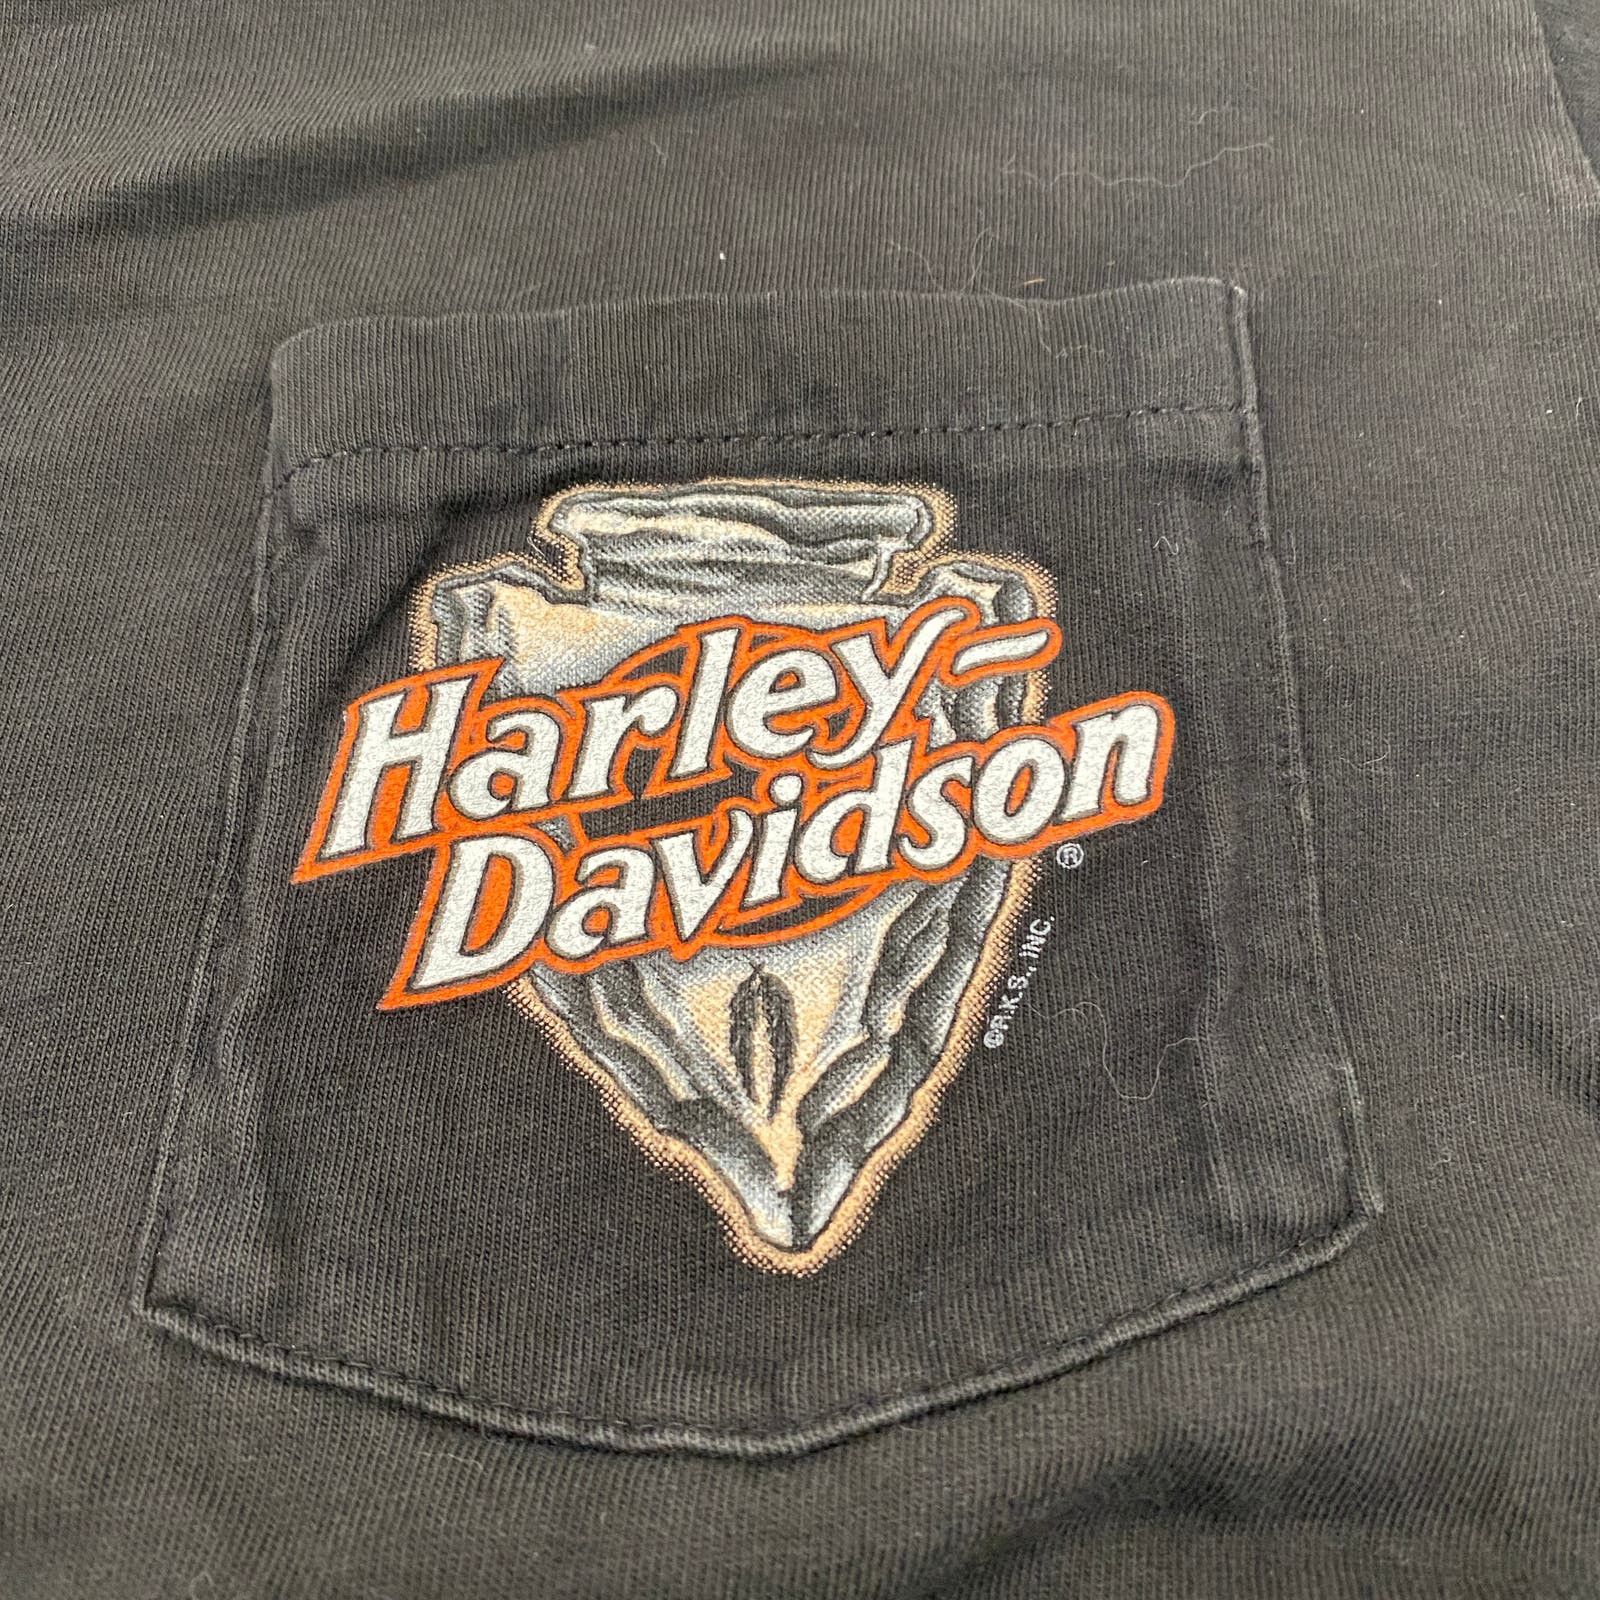 Vintage VTG 90s Harley Davison RK Stratman Shirt Men's M Size US M / EU 48-50 / 2 - 3 Thumbnail